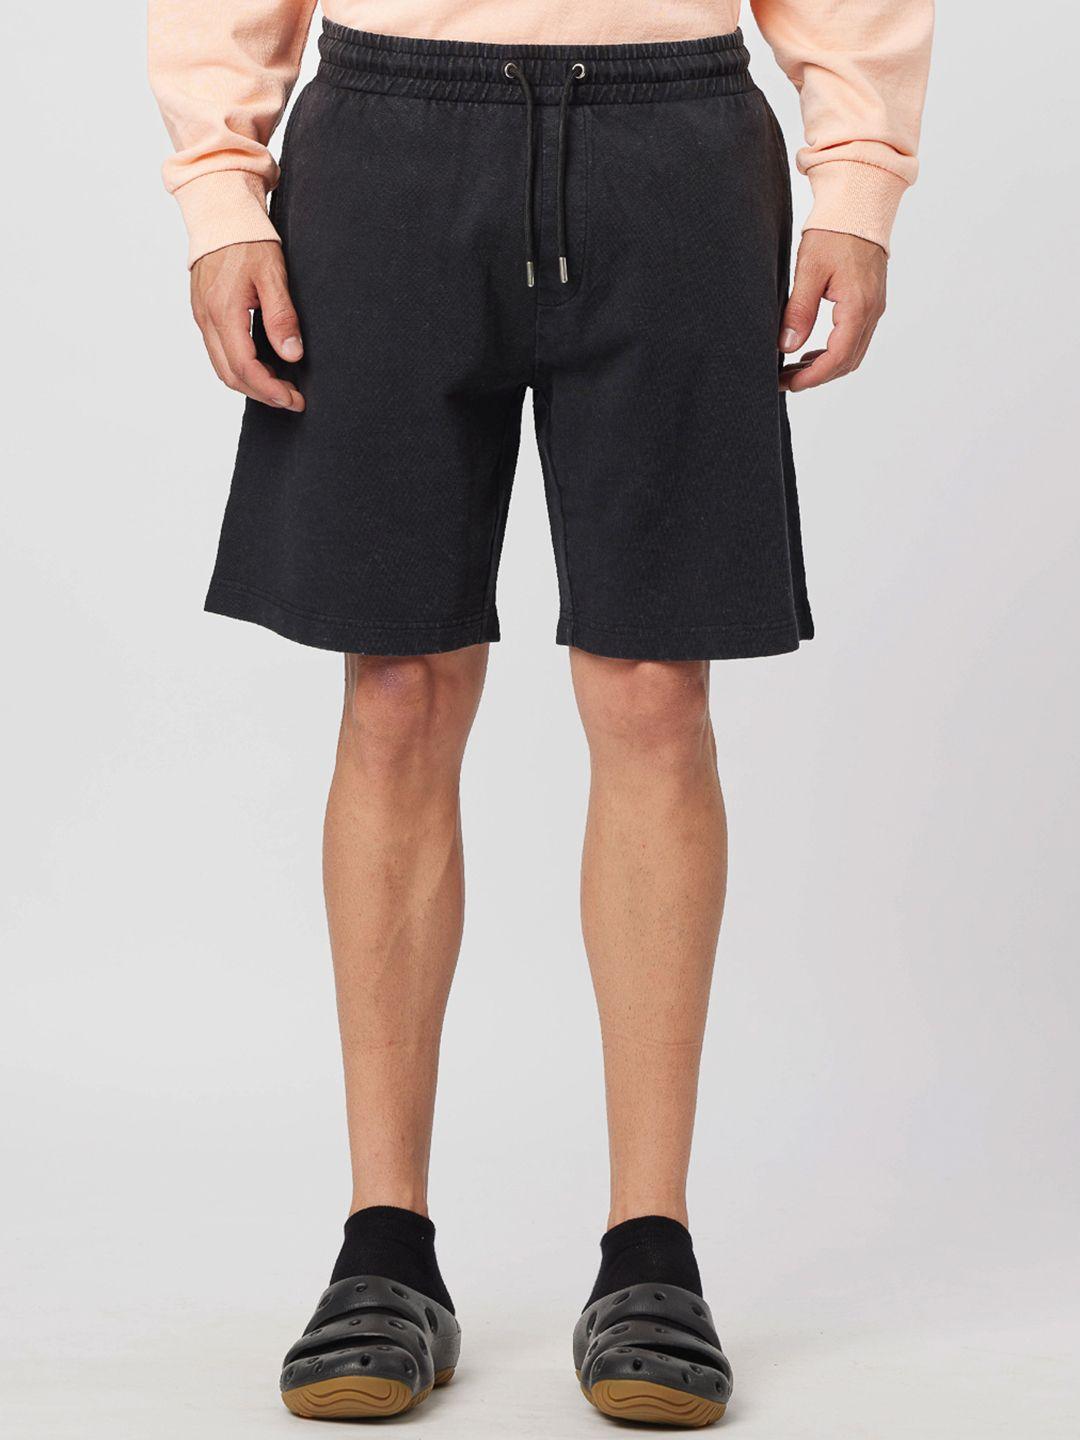 koovs men artist edit mid-rise pure cotton shorts